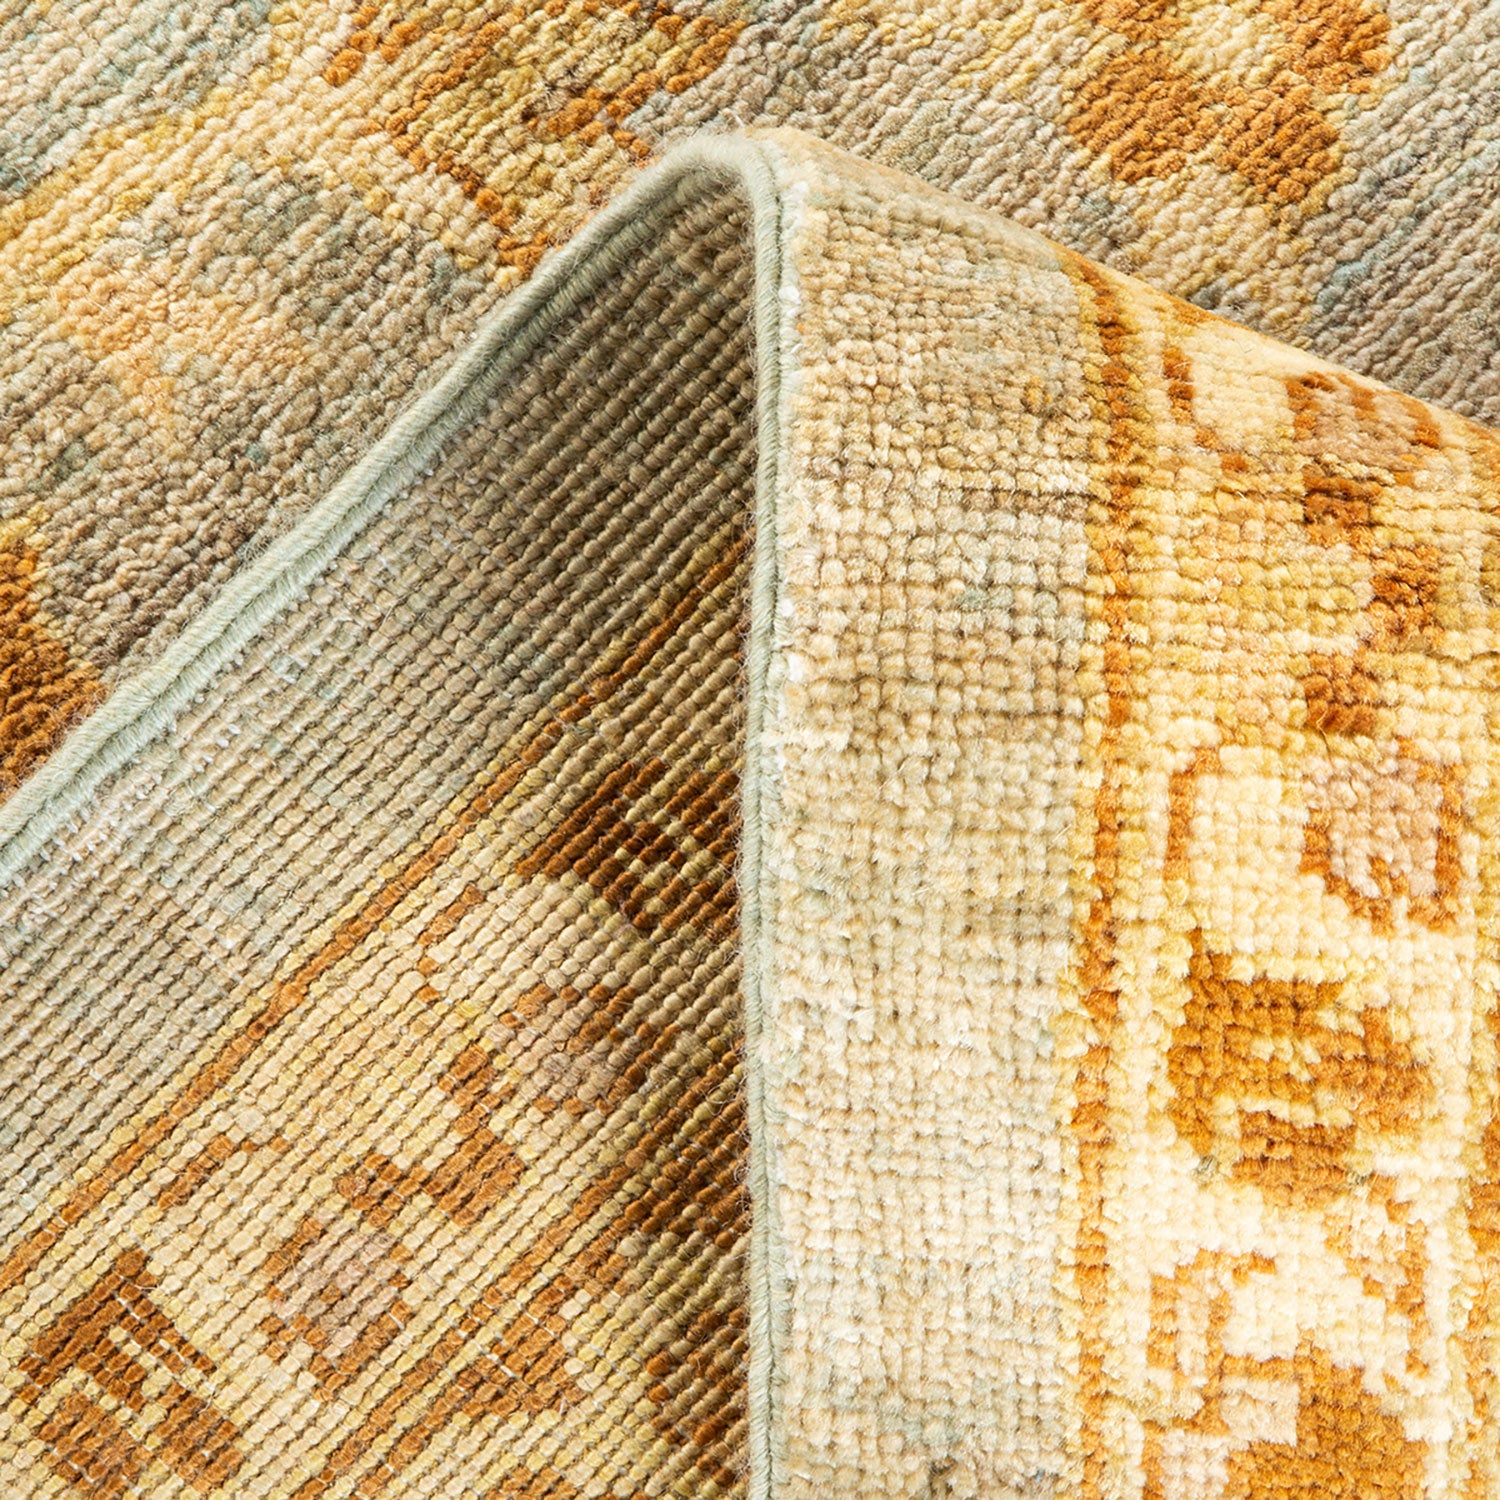 Close-up of a folded multicolored area rug showcasing intricate design.